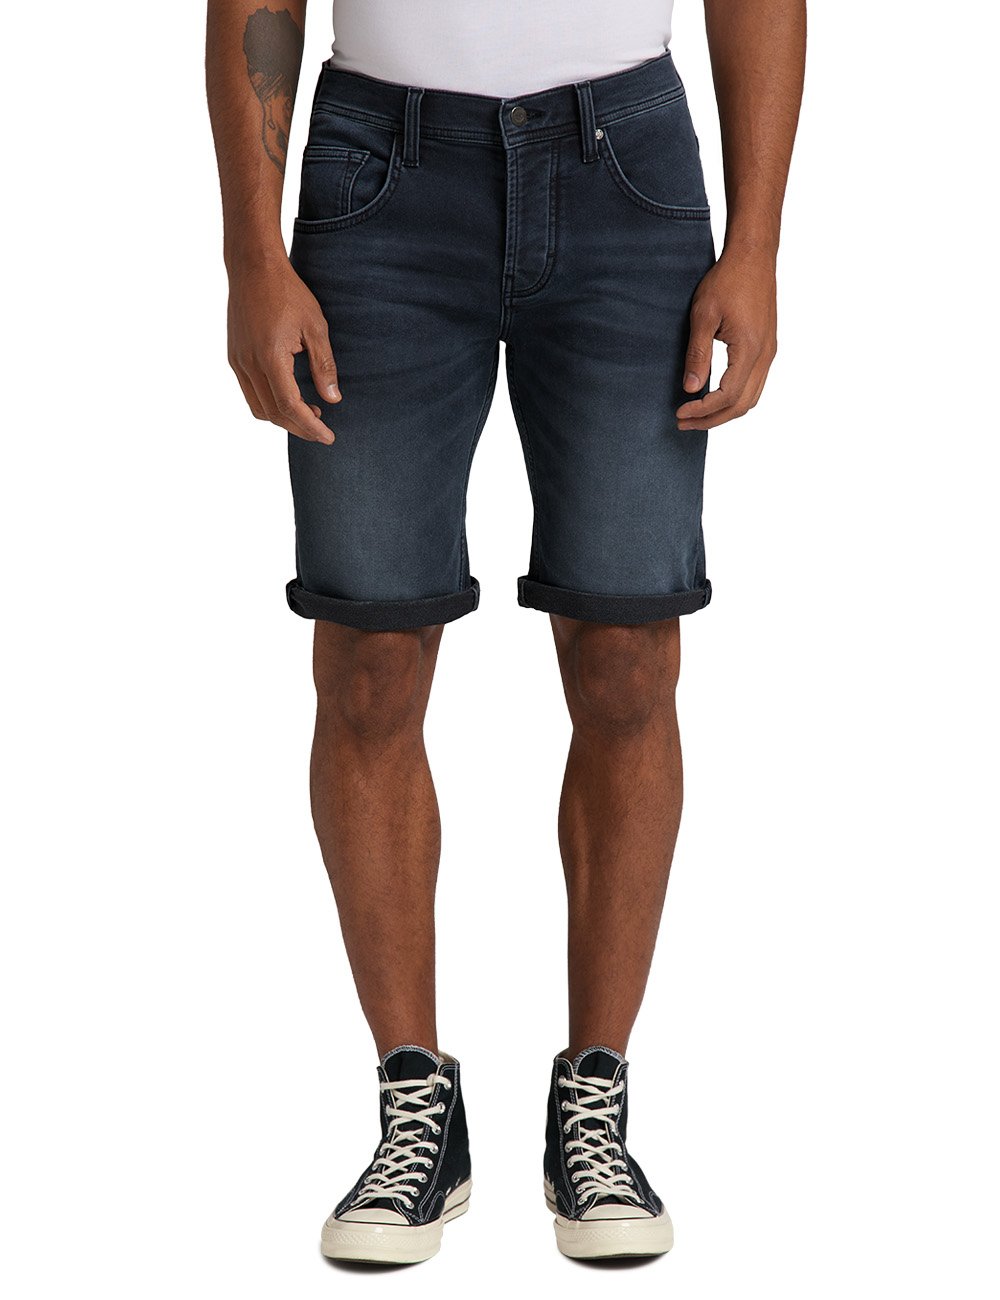 Shorts online Jeans aktuelle - shoppen Modetrends jetzt